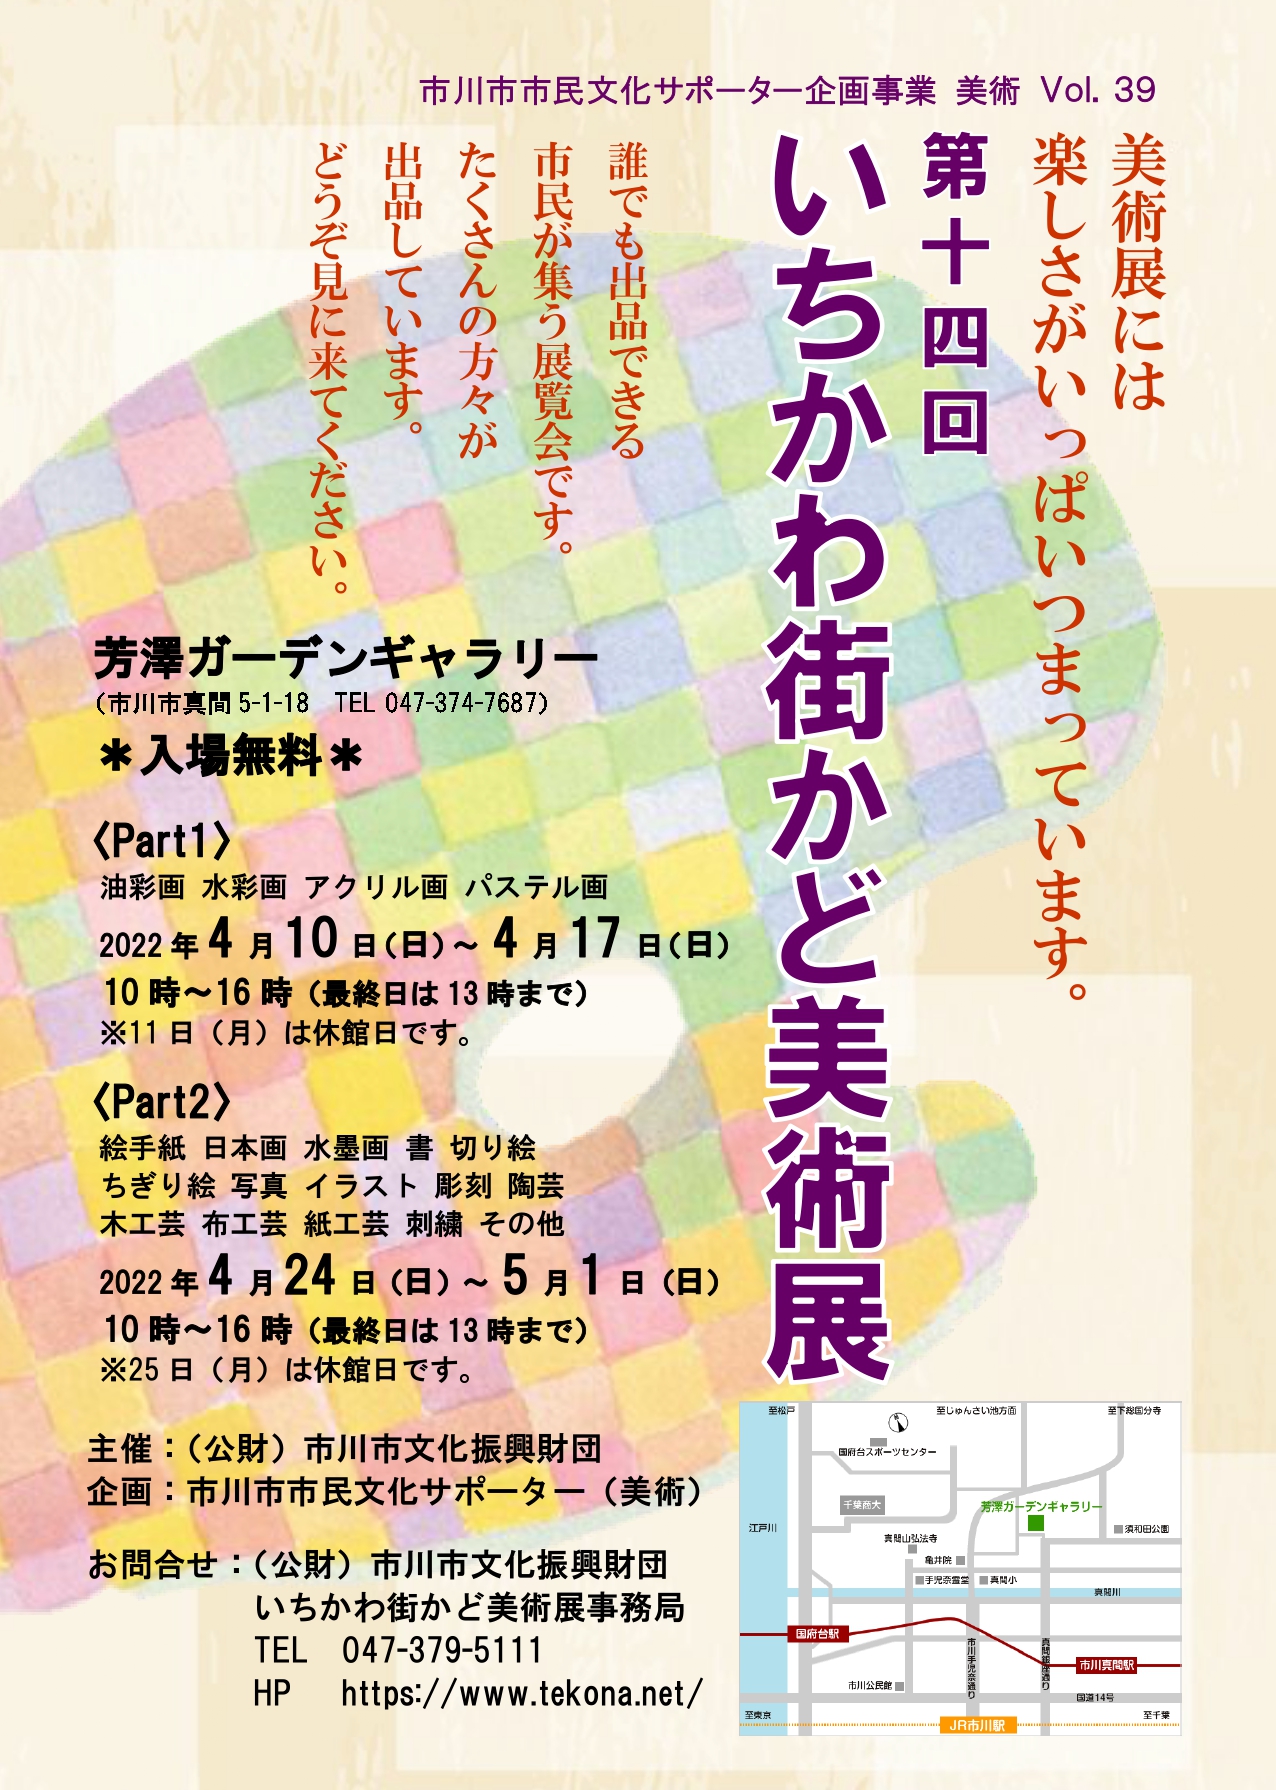 The 14th Ichikawa City Art Exhibition Yoshizawa Garden Gallery Tokyo Art Beat